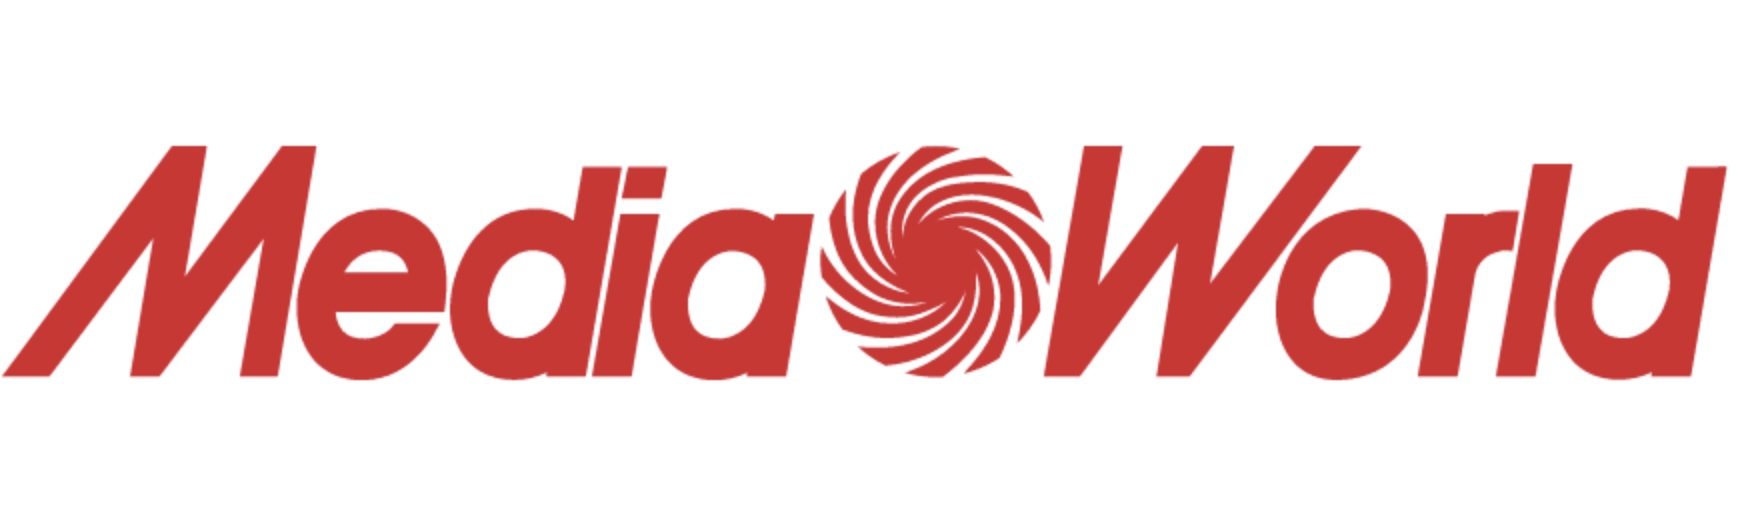 Mediaworld-logo-teambulding